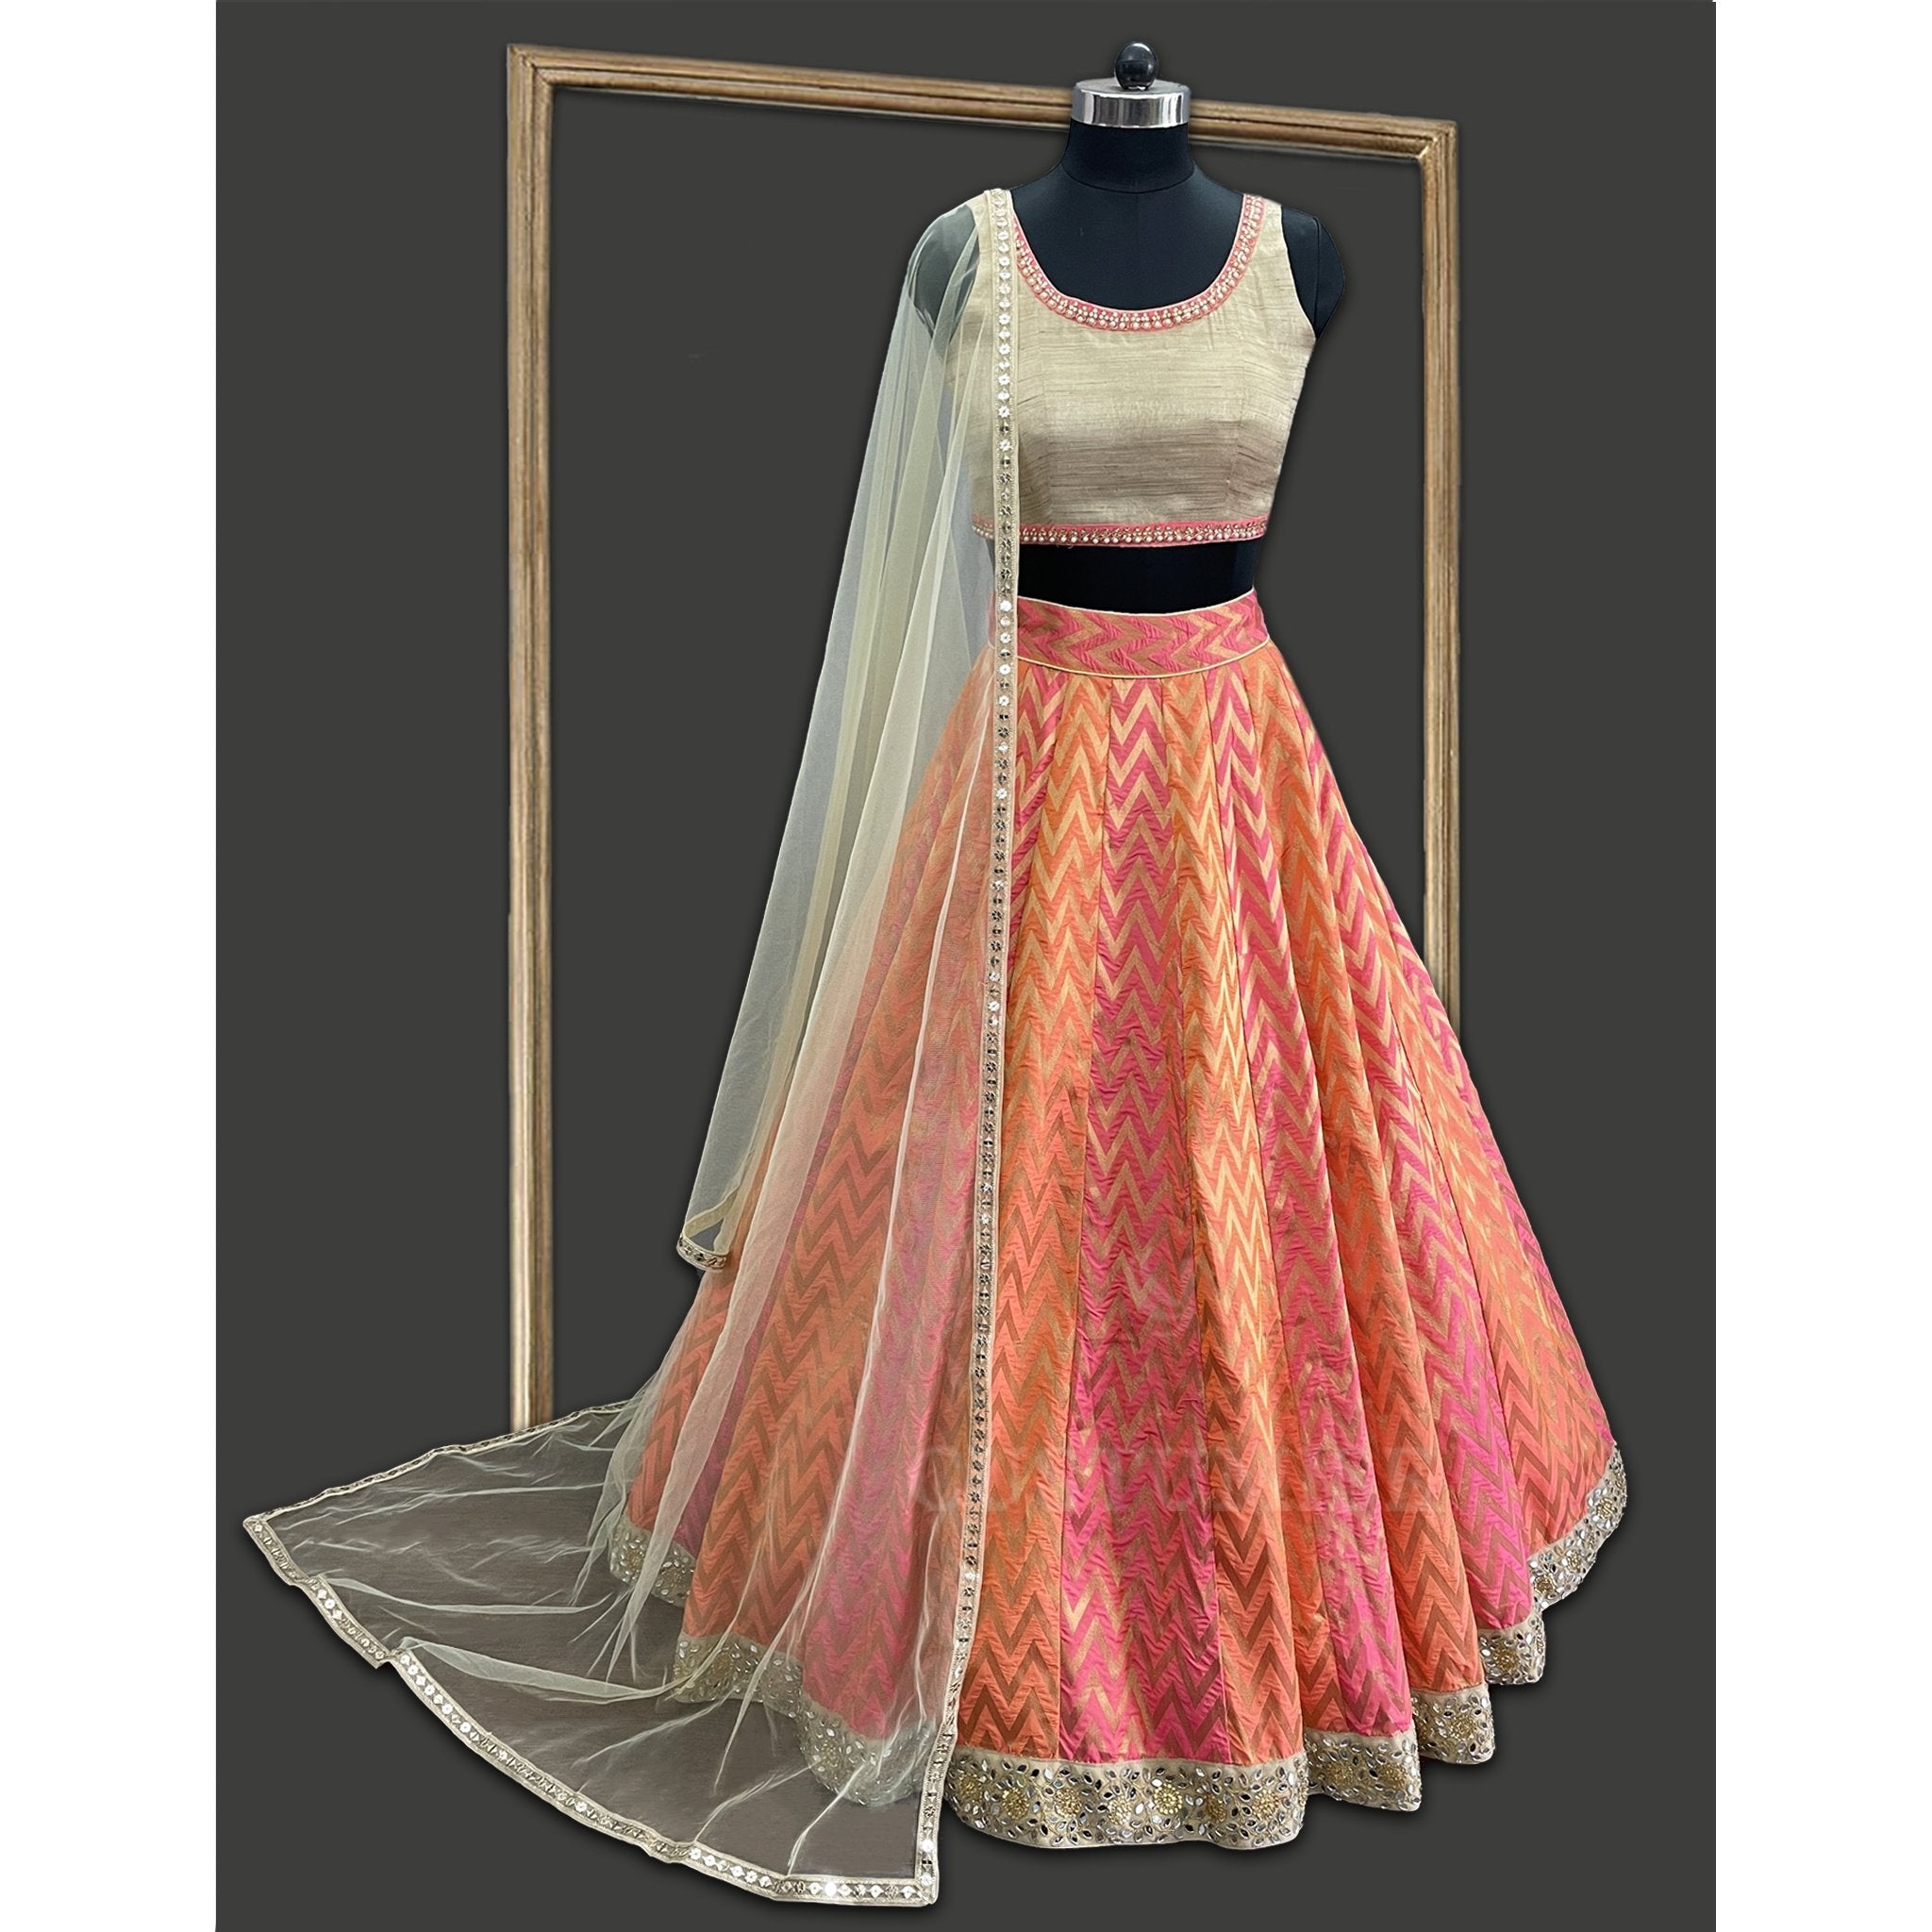 Elegant Orange and Peach Chevron Banarsi Lehenga - Indian Designer Bridal Wedding Outfit